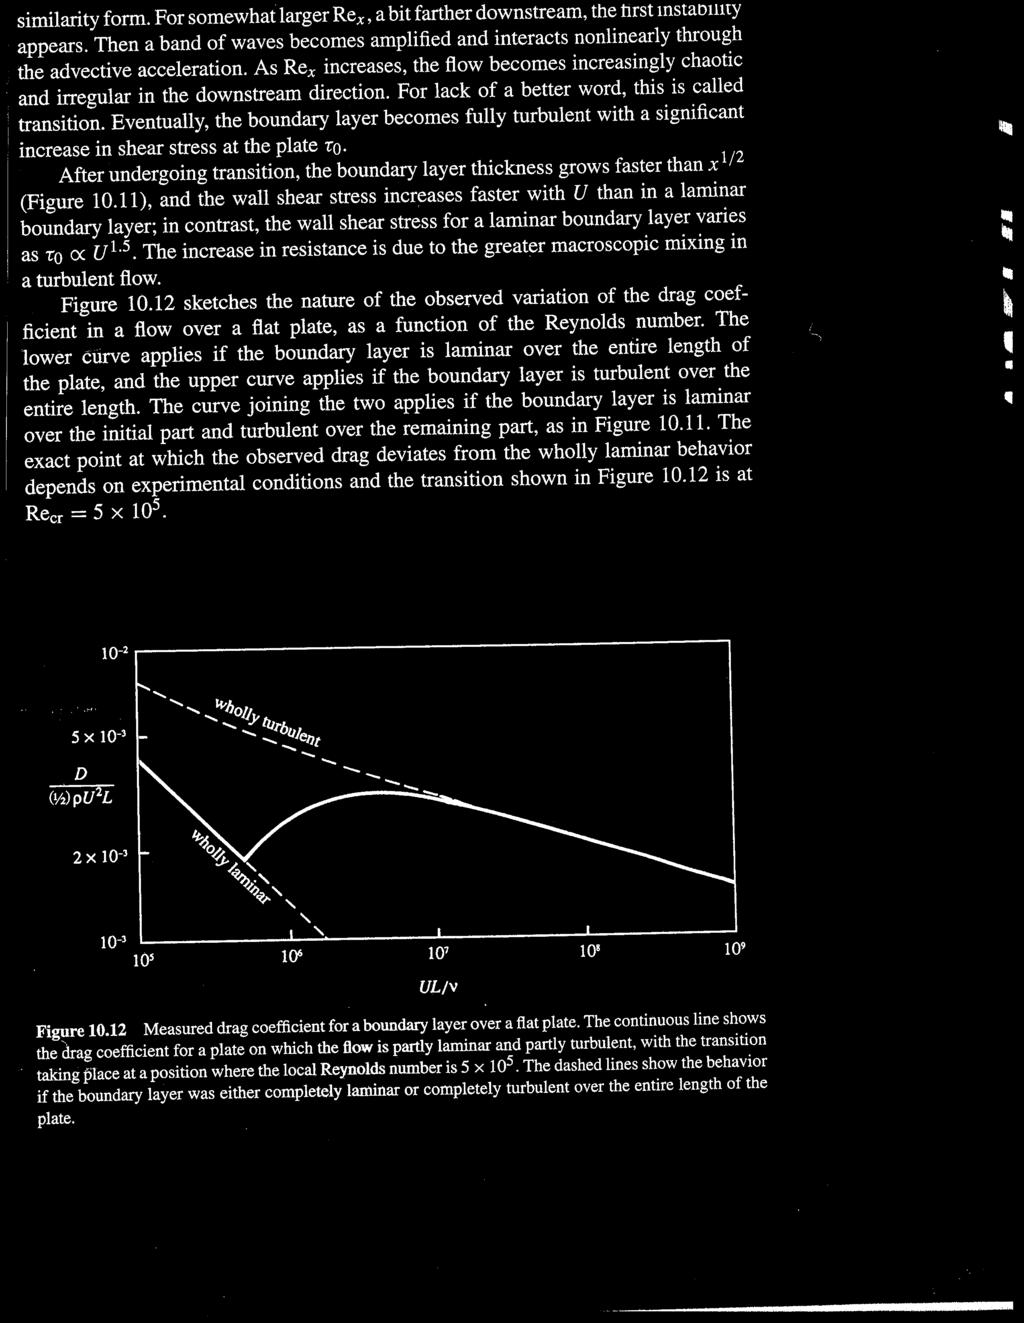 Long Fla Plaes: Transiion o Turbulence 10-2..,.,. " " " liolly 5 x 10-3 - D M)pU2L -- " " 4irÒlJJ. - _ el1-2 x 10-3 I o.a 6.,,.,,, ", 10-3 105 1() 10' 109 109 UL/v Figure 10.